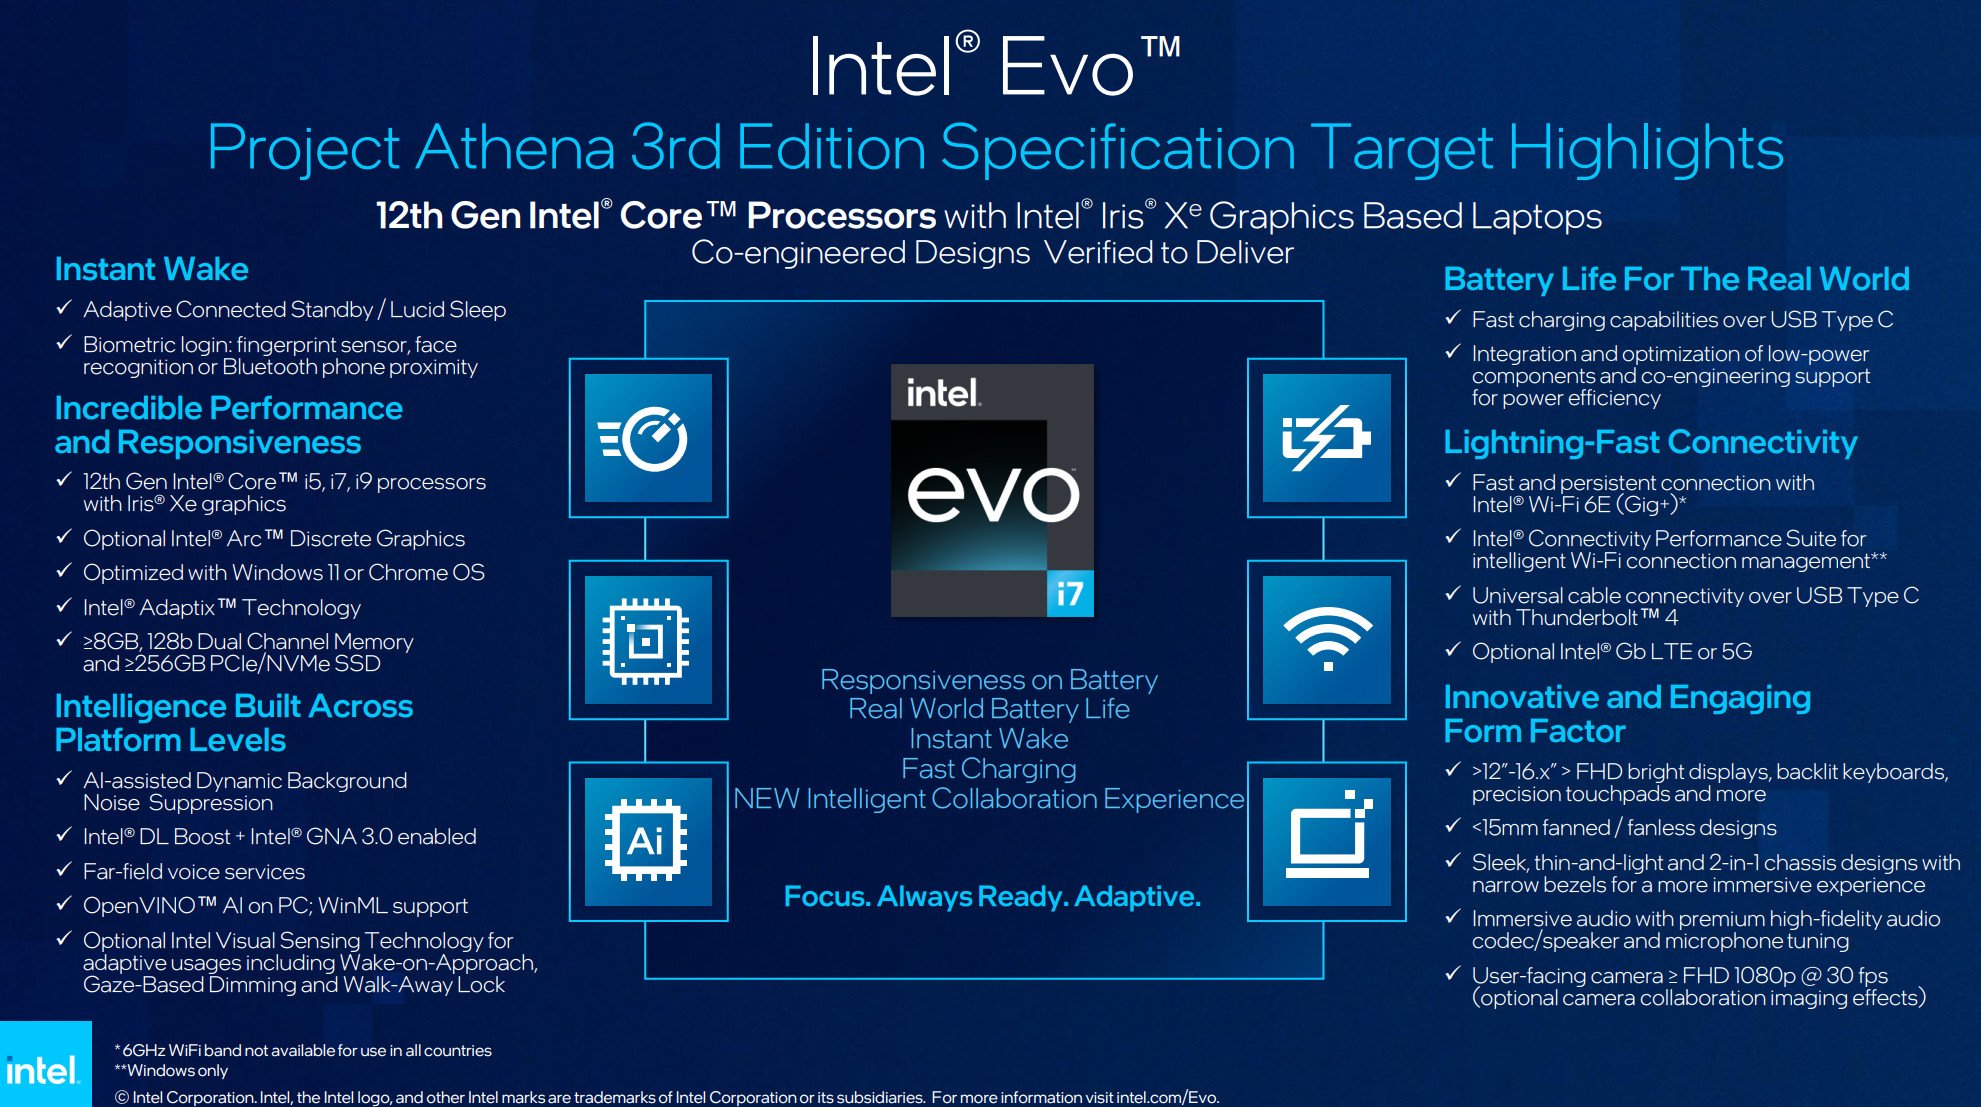 Intel Evo 3rd Gen